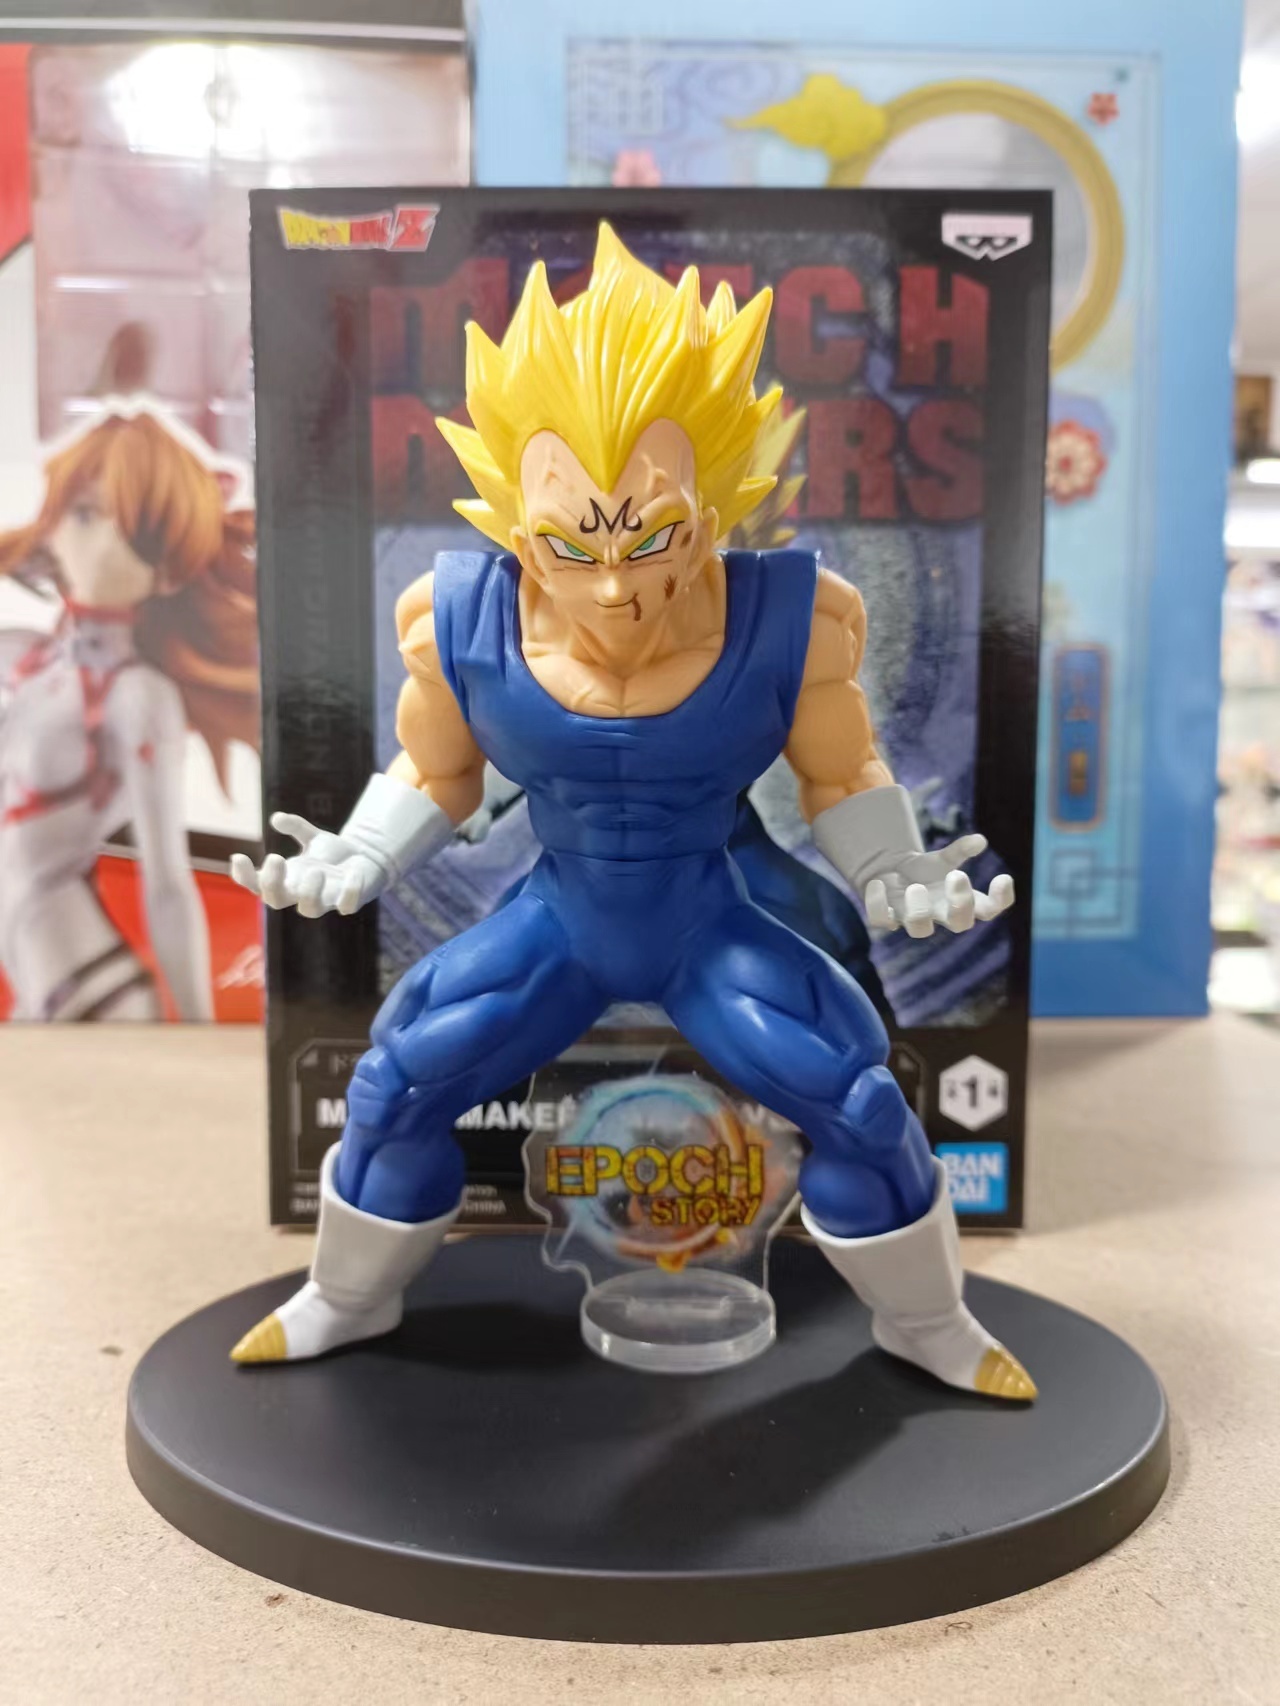 Figurine Bandai Dragon Ball Super Vegeta - 17 cm (Dragon Ball Kai ver.) –